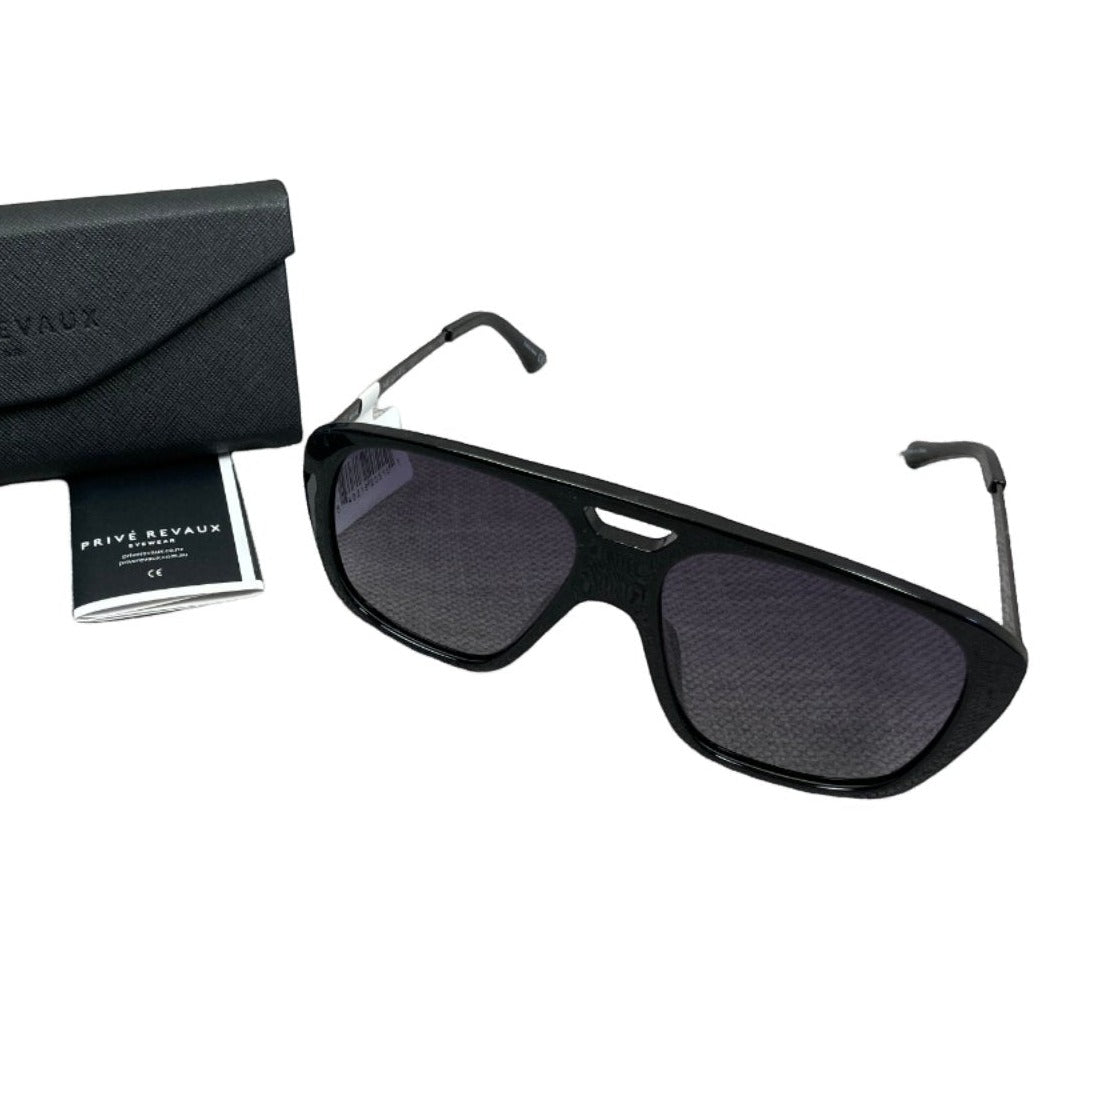 NEW with tag - Prive Revaux Jet Lag Polarised Sunglasses